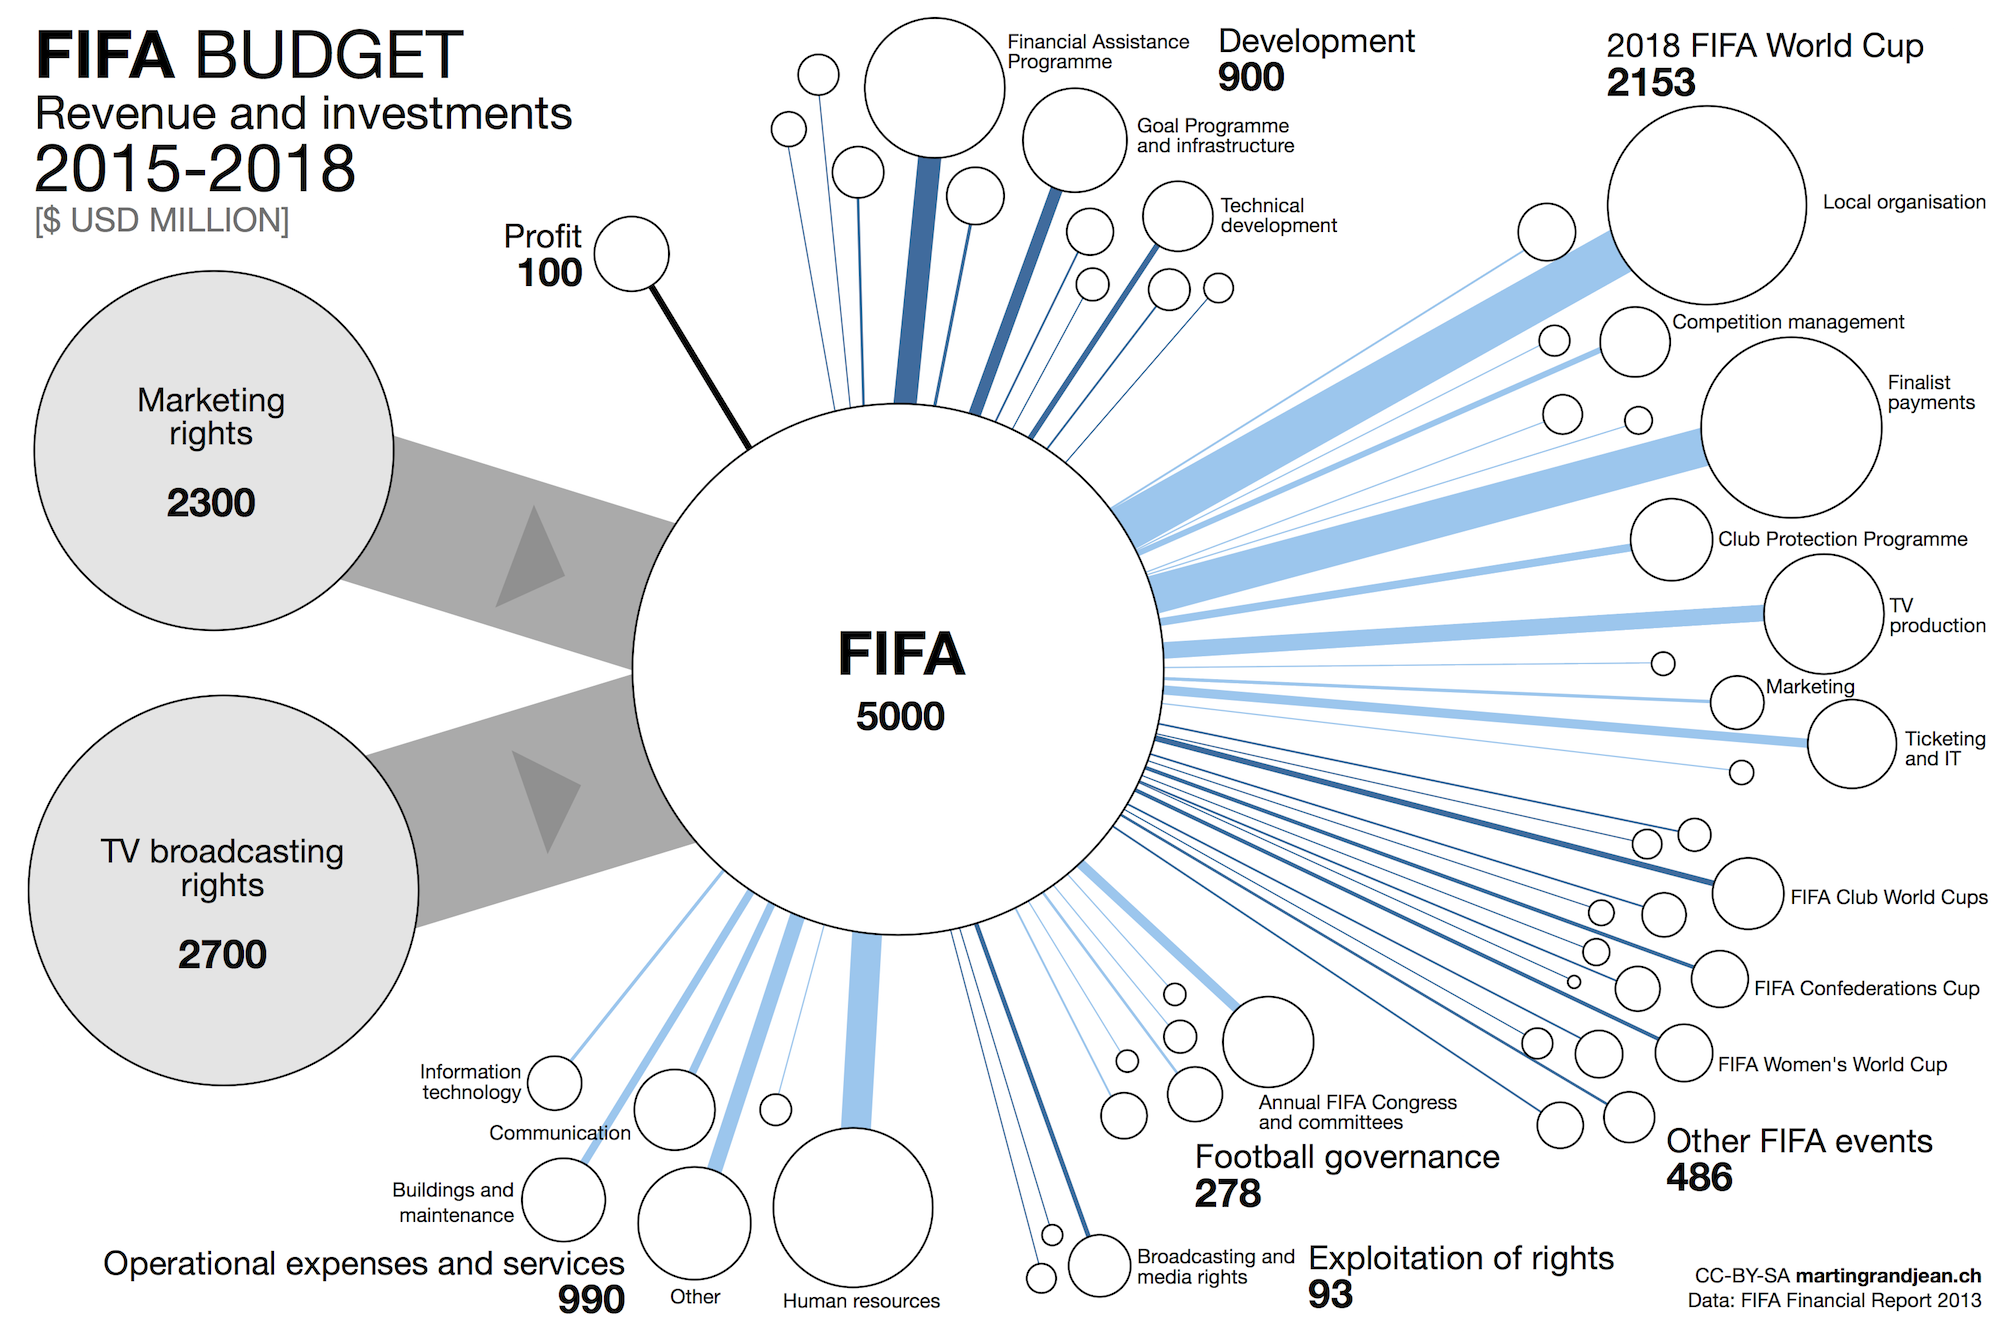 [Data Visualization] The FIFA budget 2015-2018